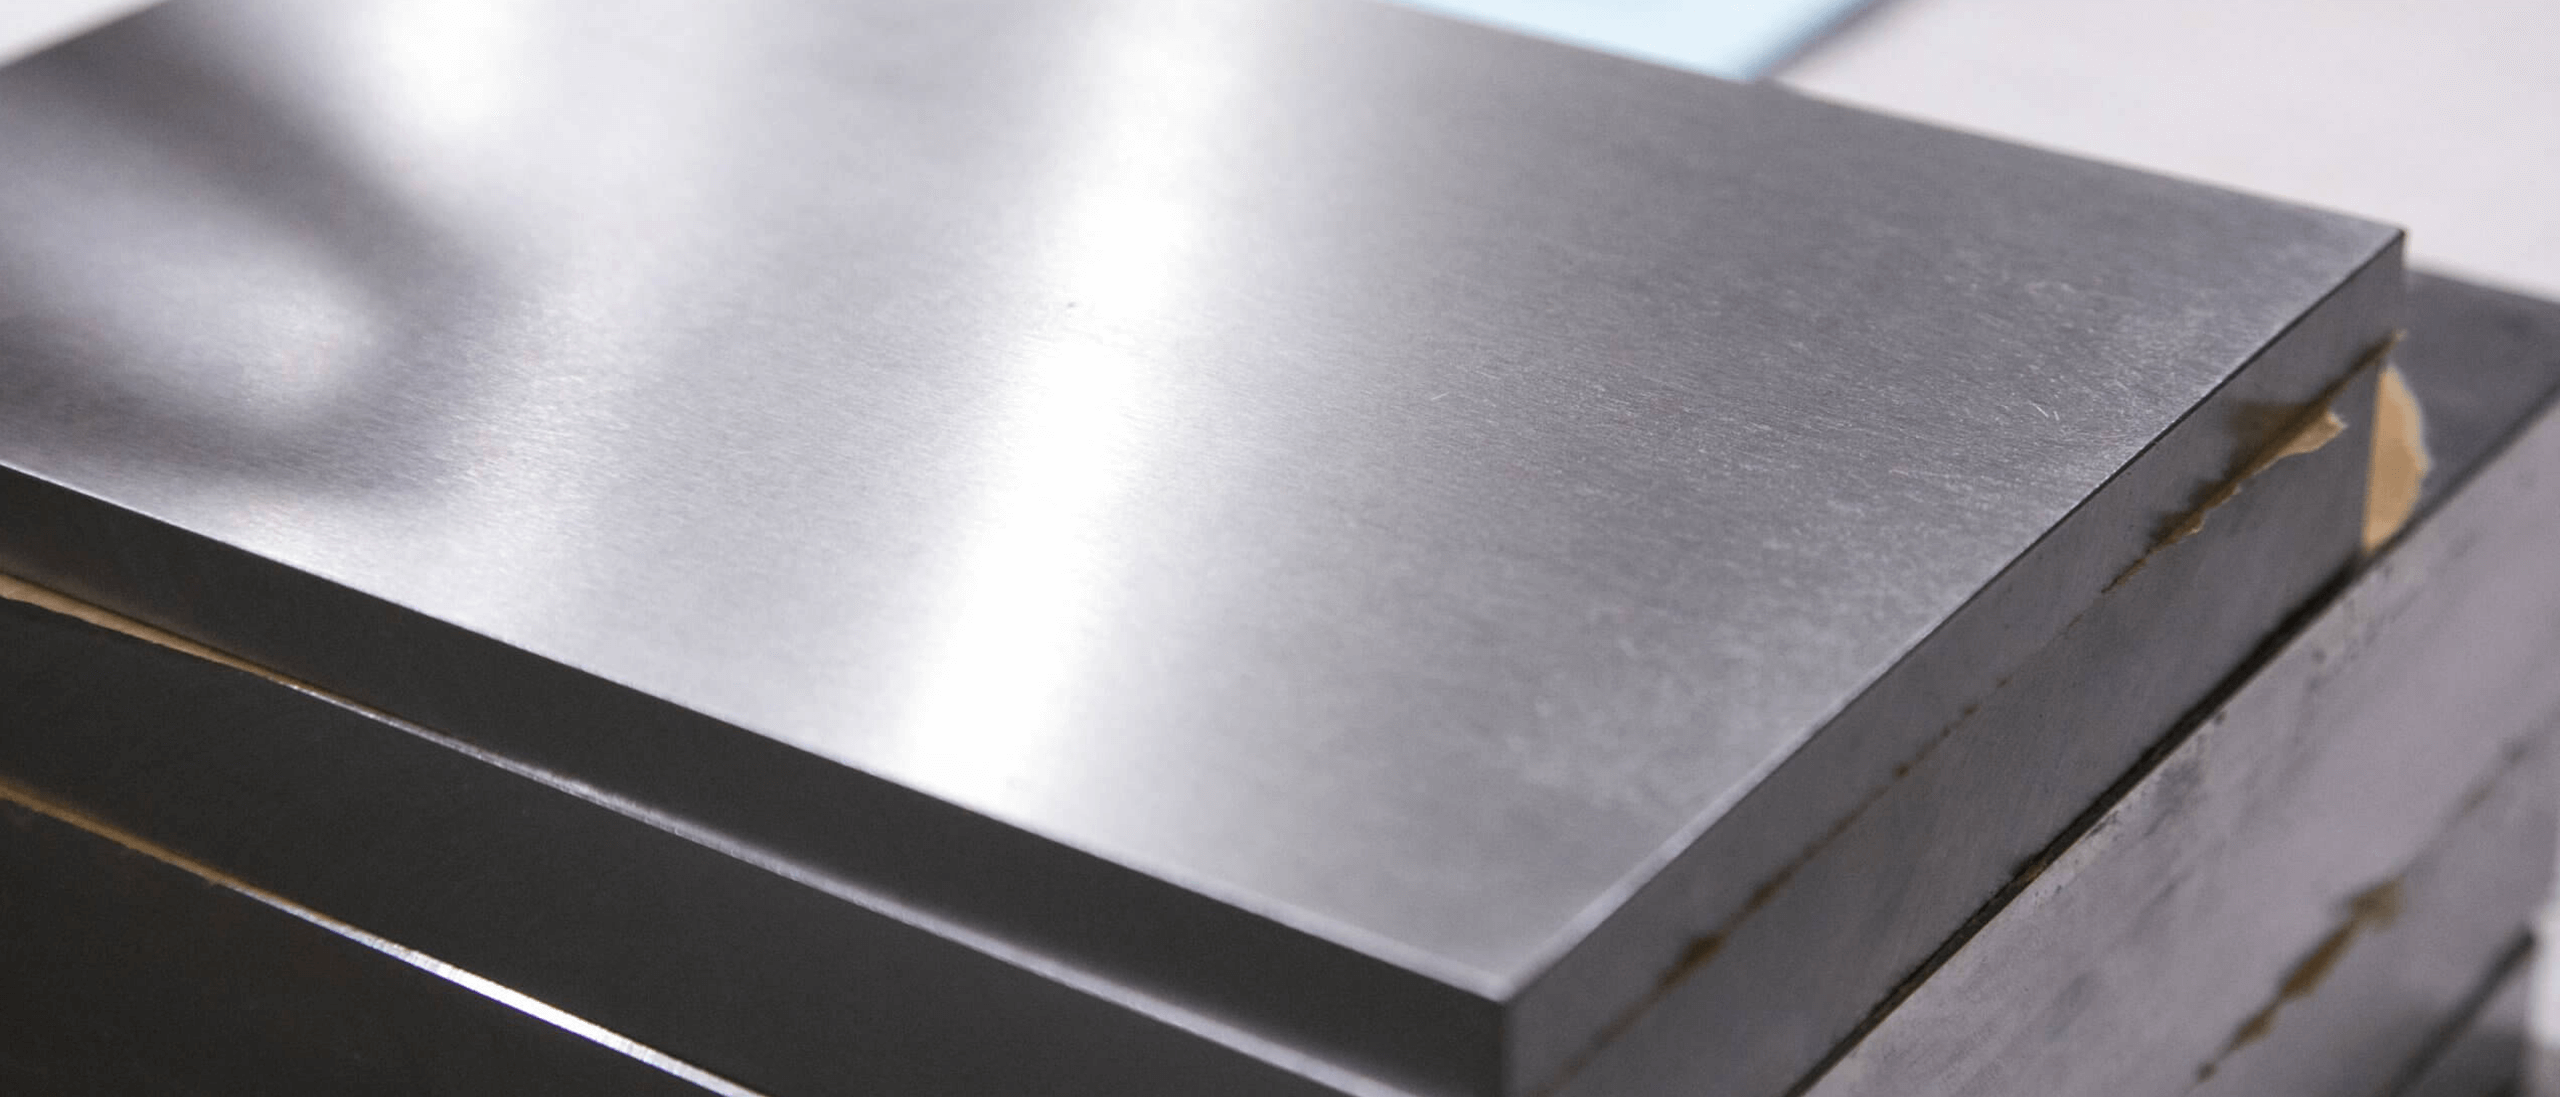 Steel plates Precision (Mattison) ground finish